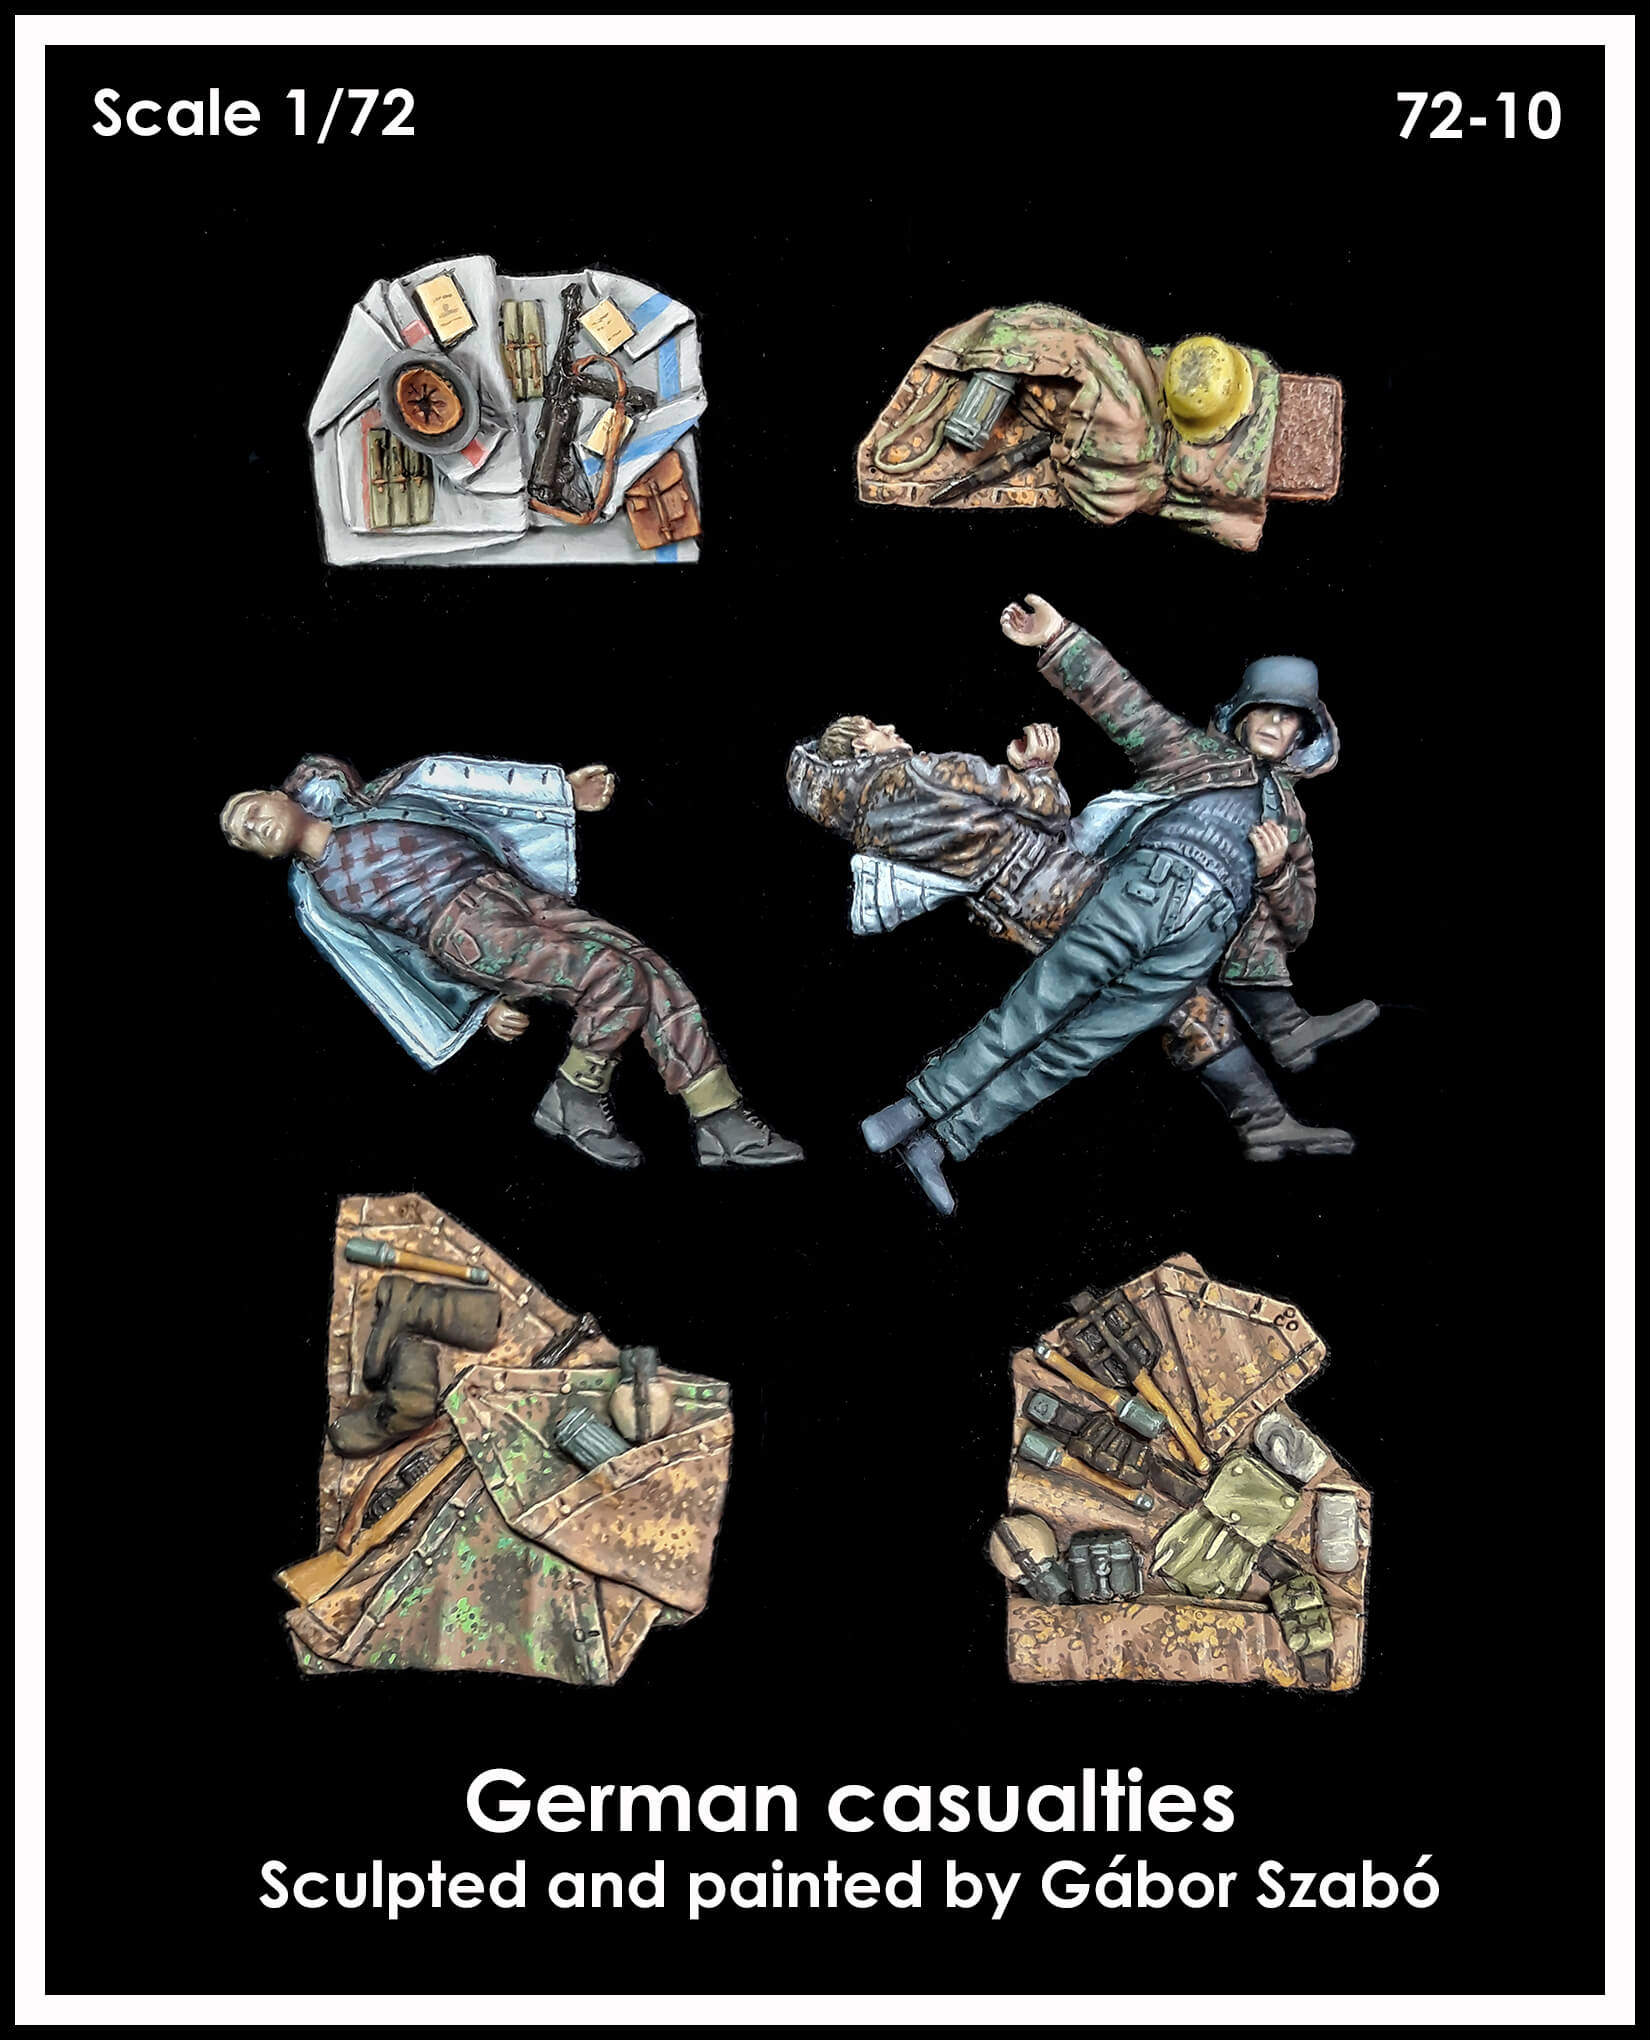 WW2 German casualties